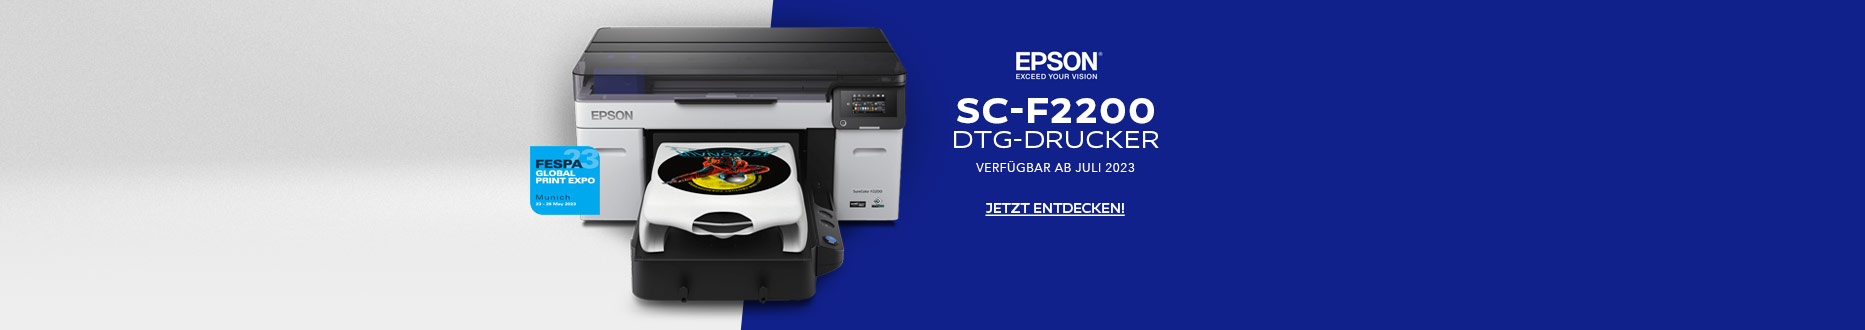 Epson SC-F2200